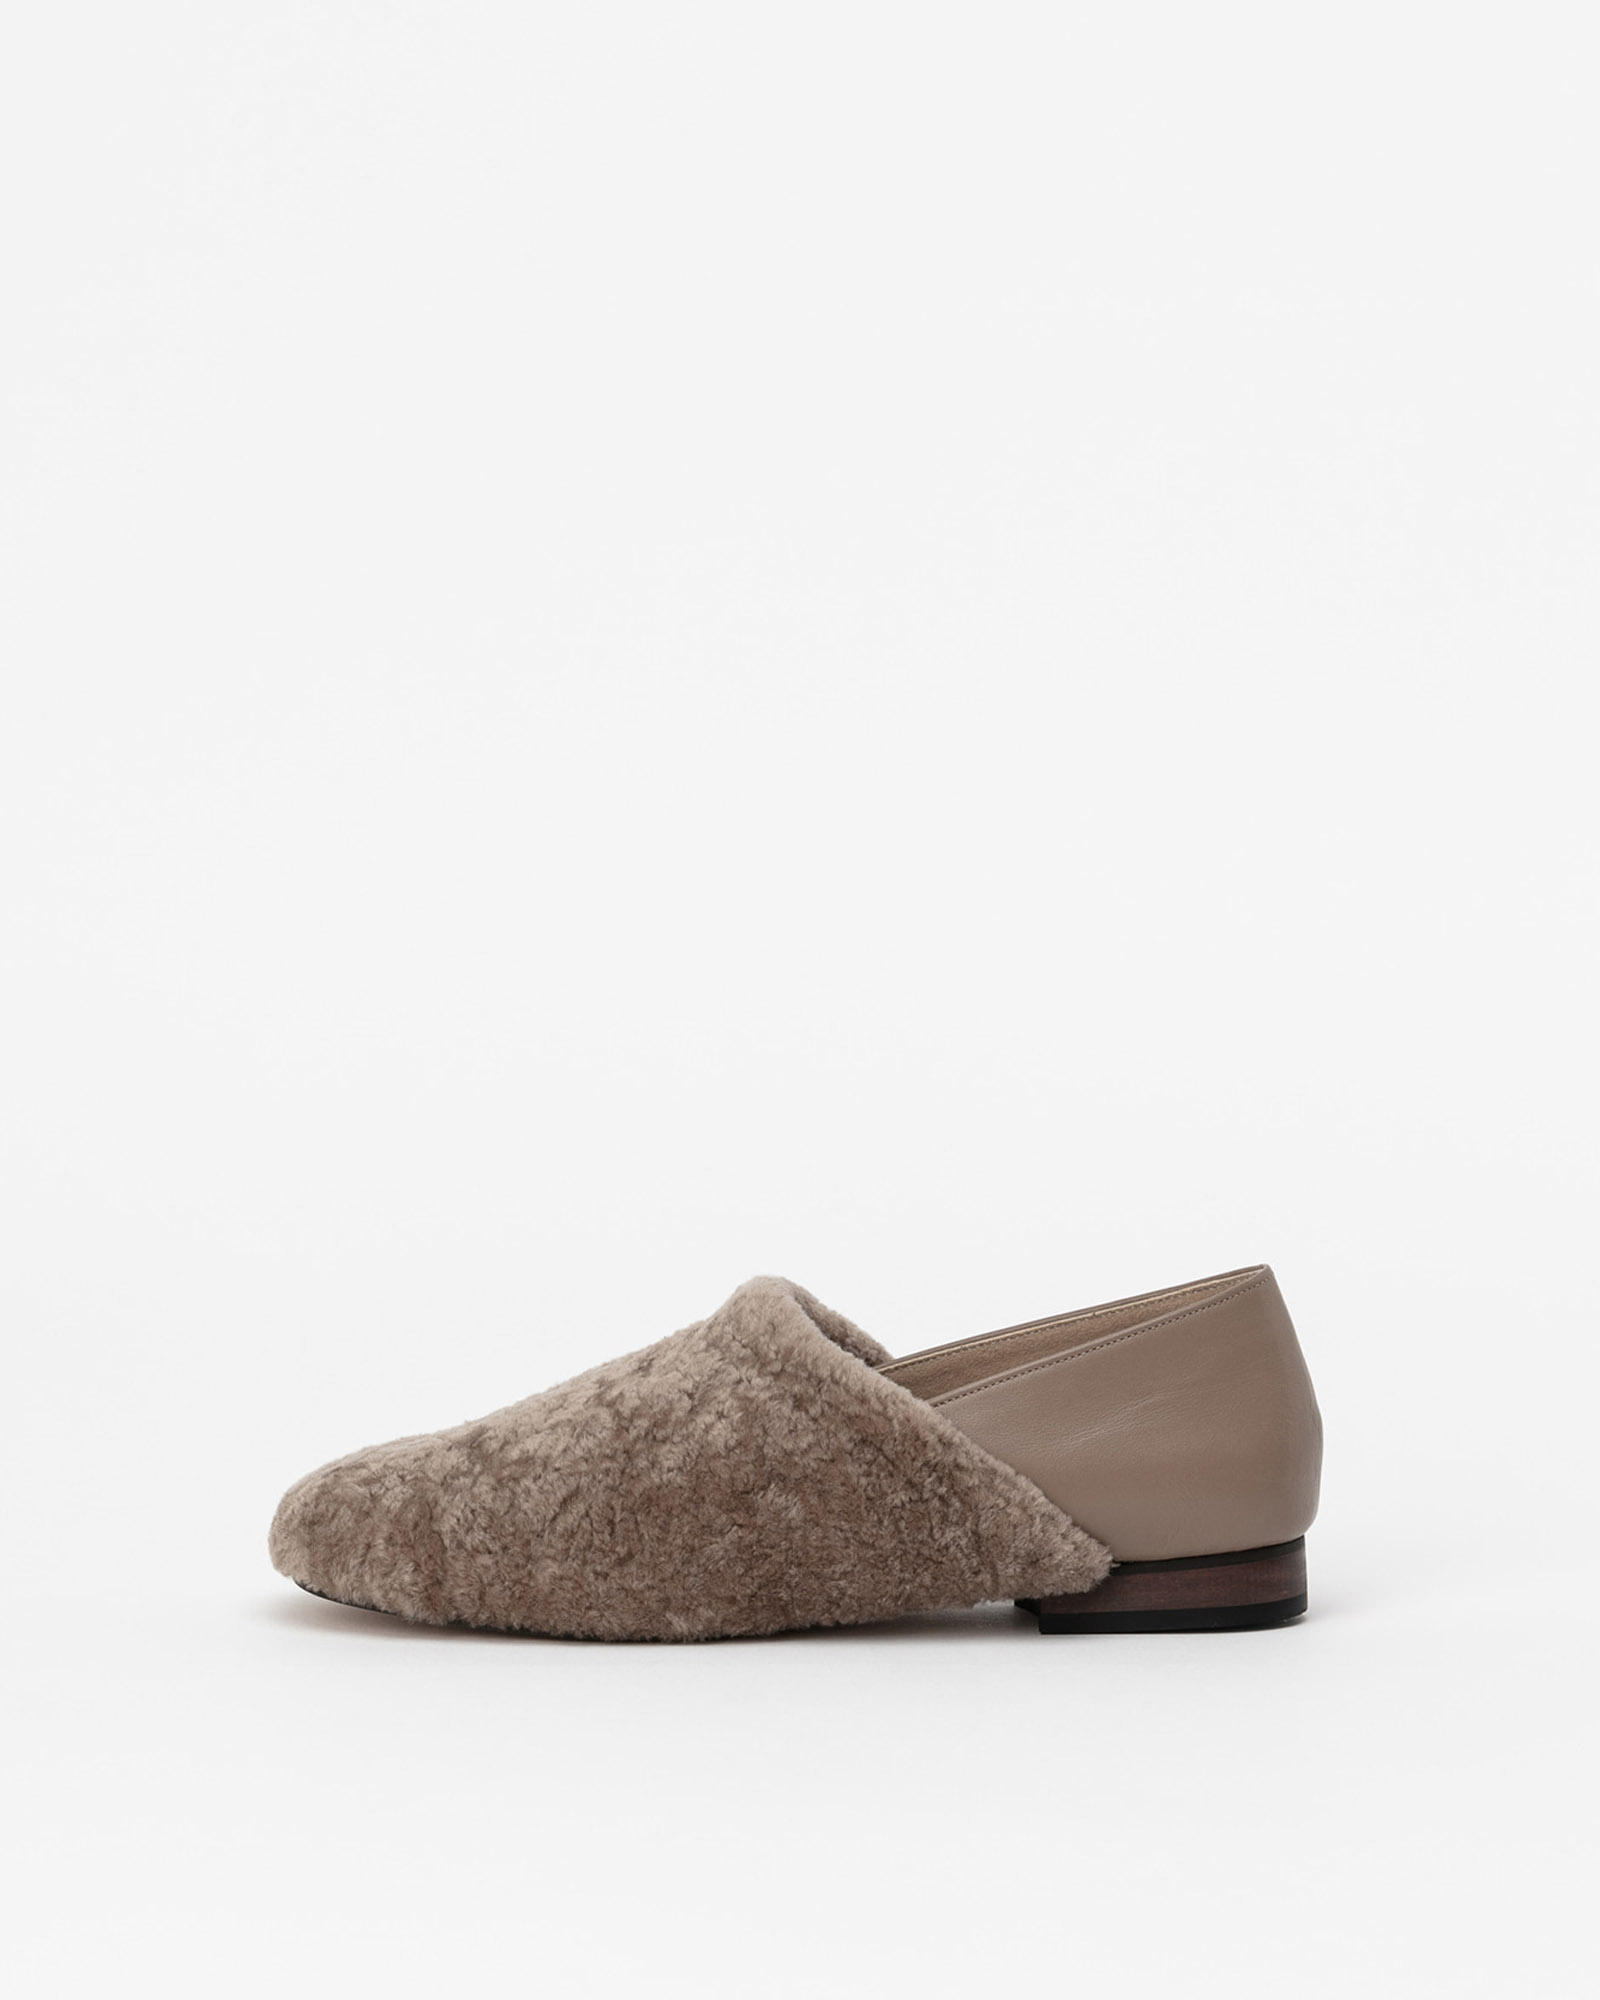 Mina Shearling Fur Flat Shoes in Beige